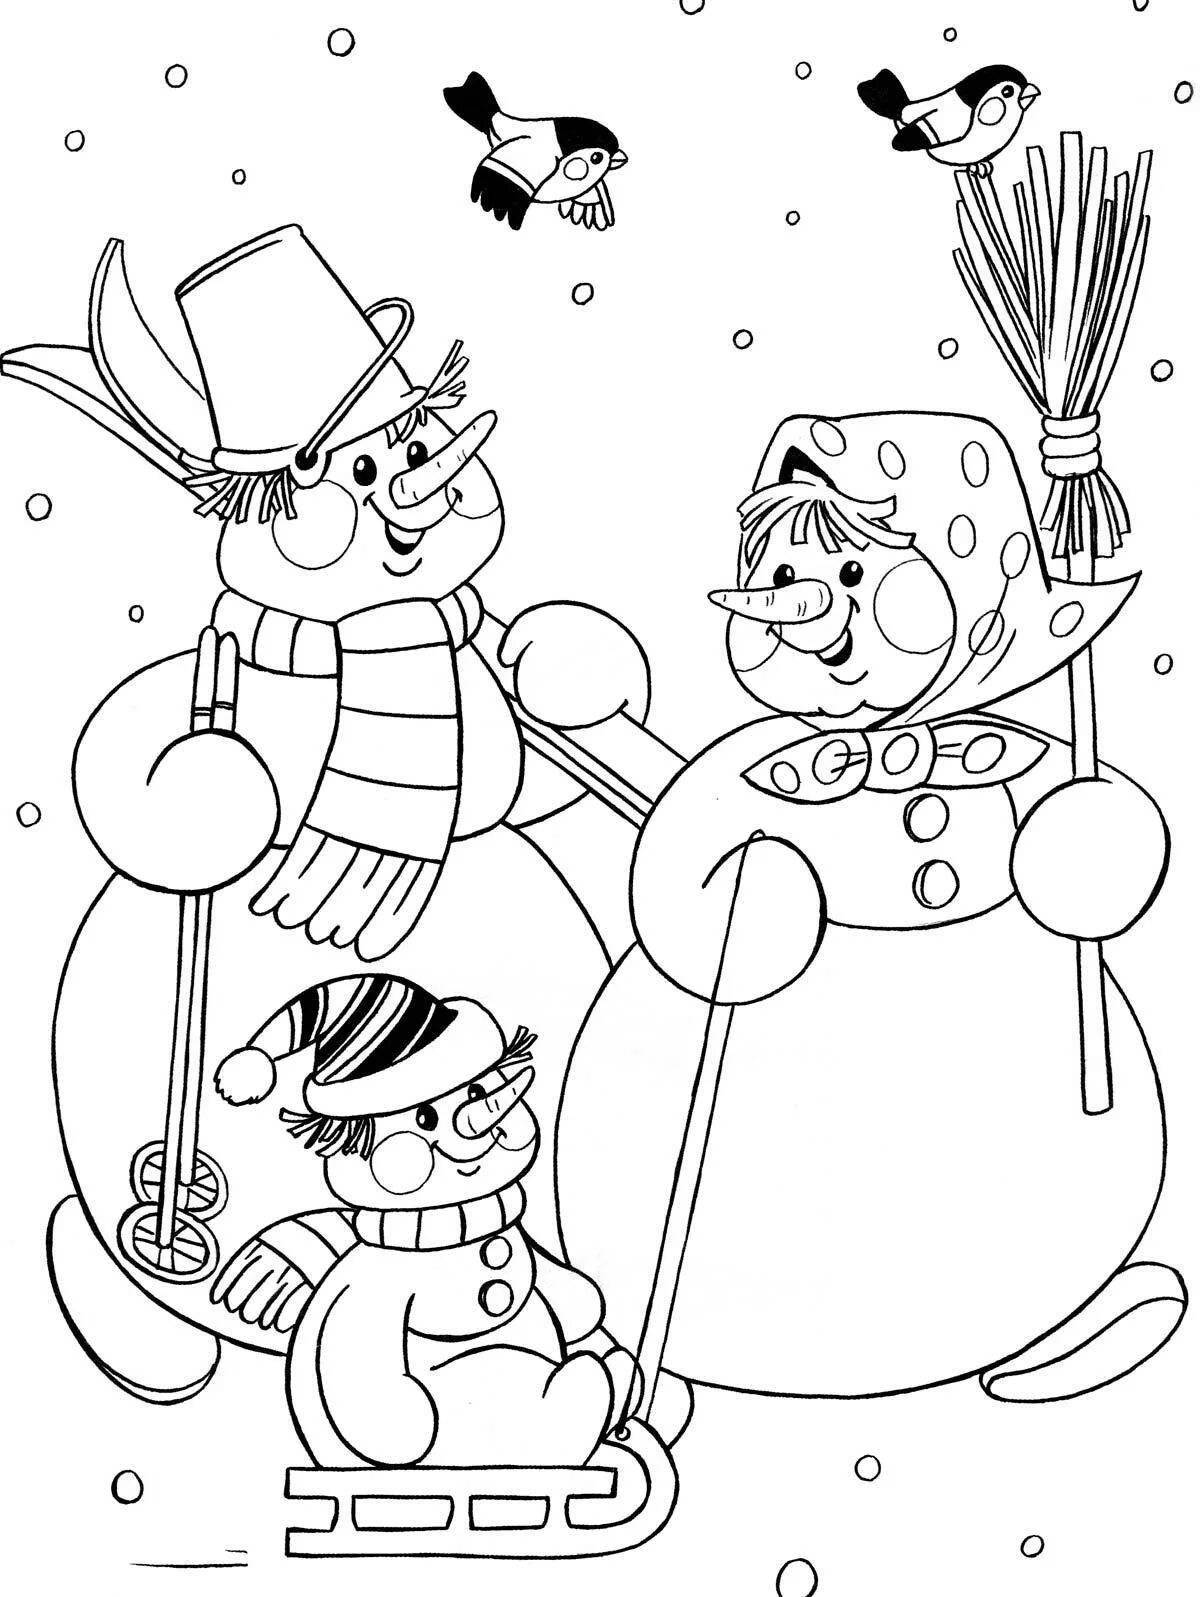 Snowman family #2